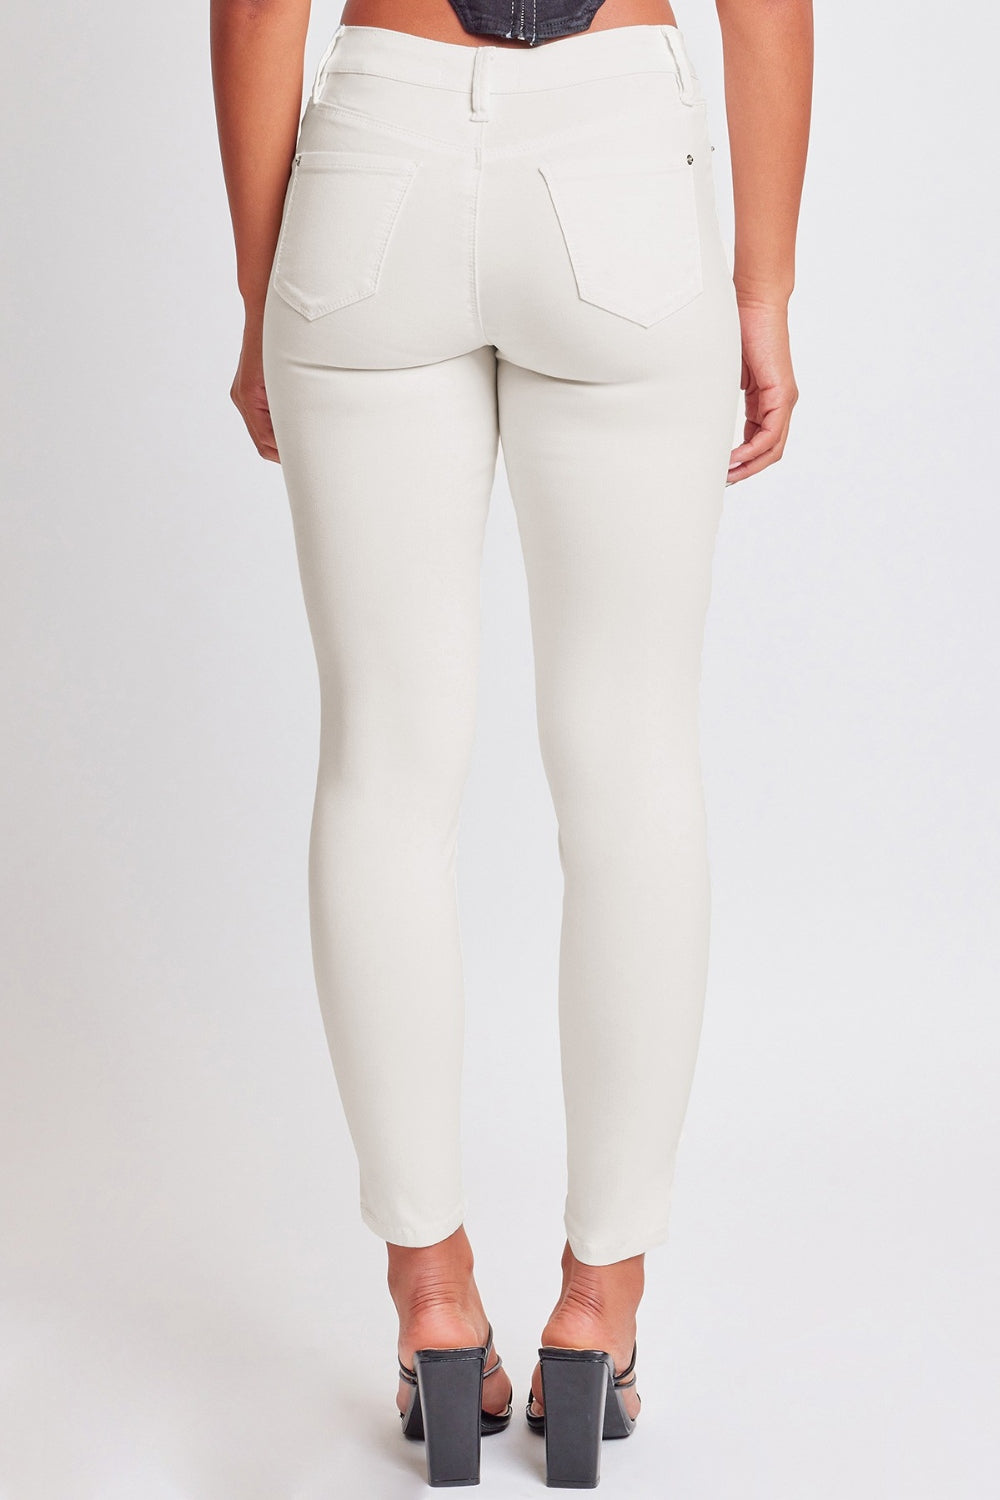 YMI Jeanswear Hyperstretch Mid-Rise Skinny Jeans - SELFTRITSS